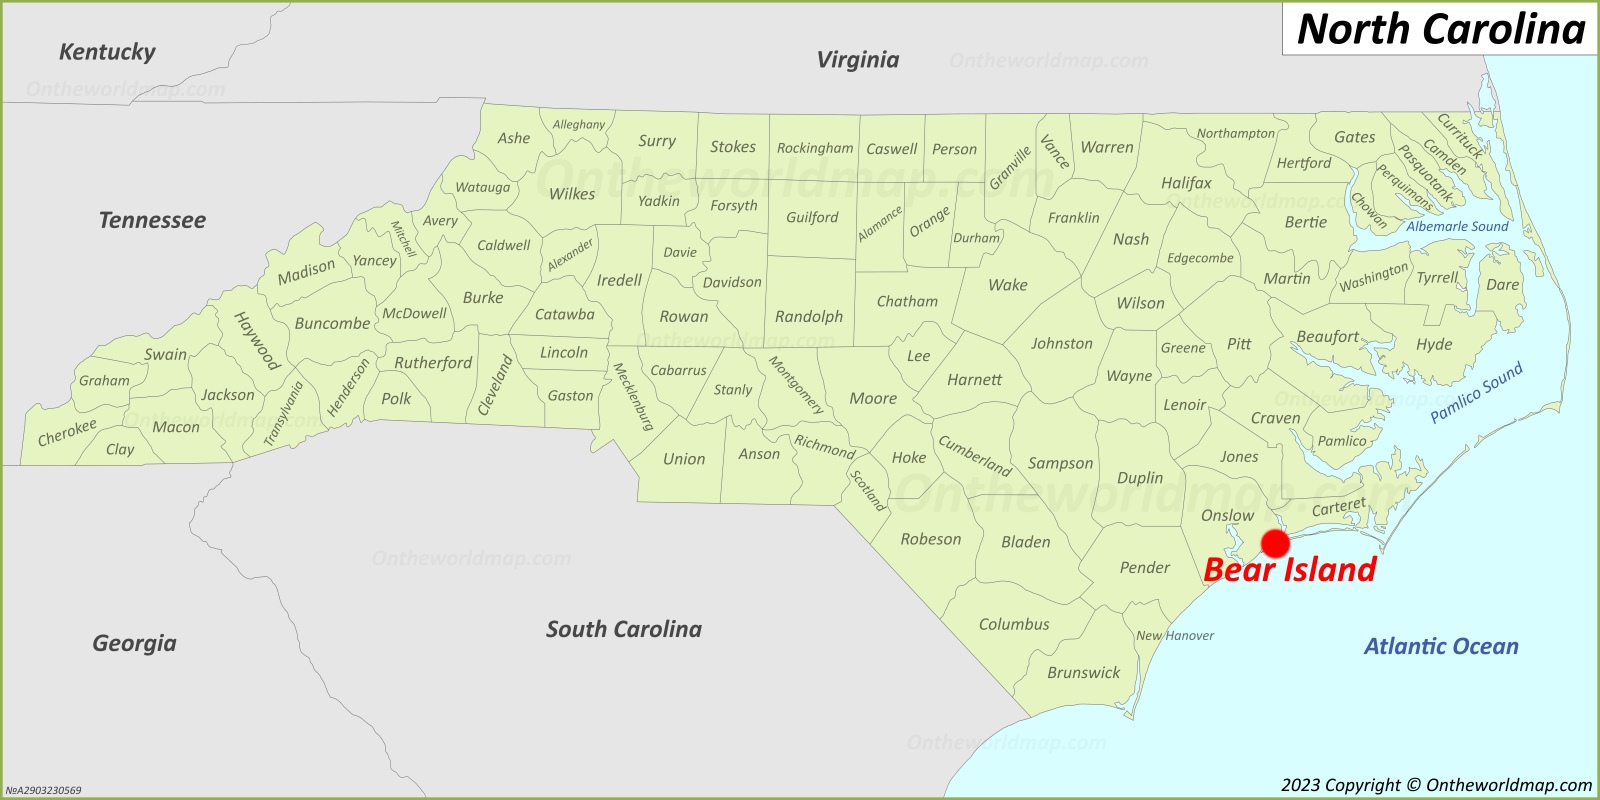 Bear Island Location On The North Carolina Map